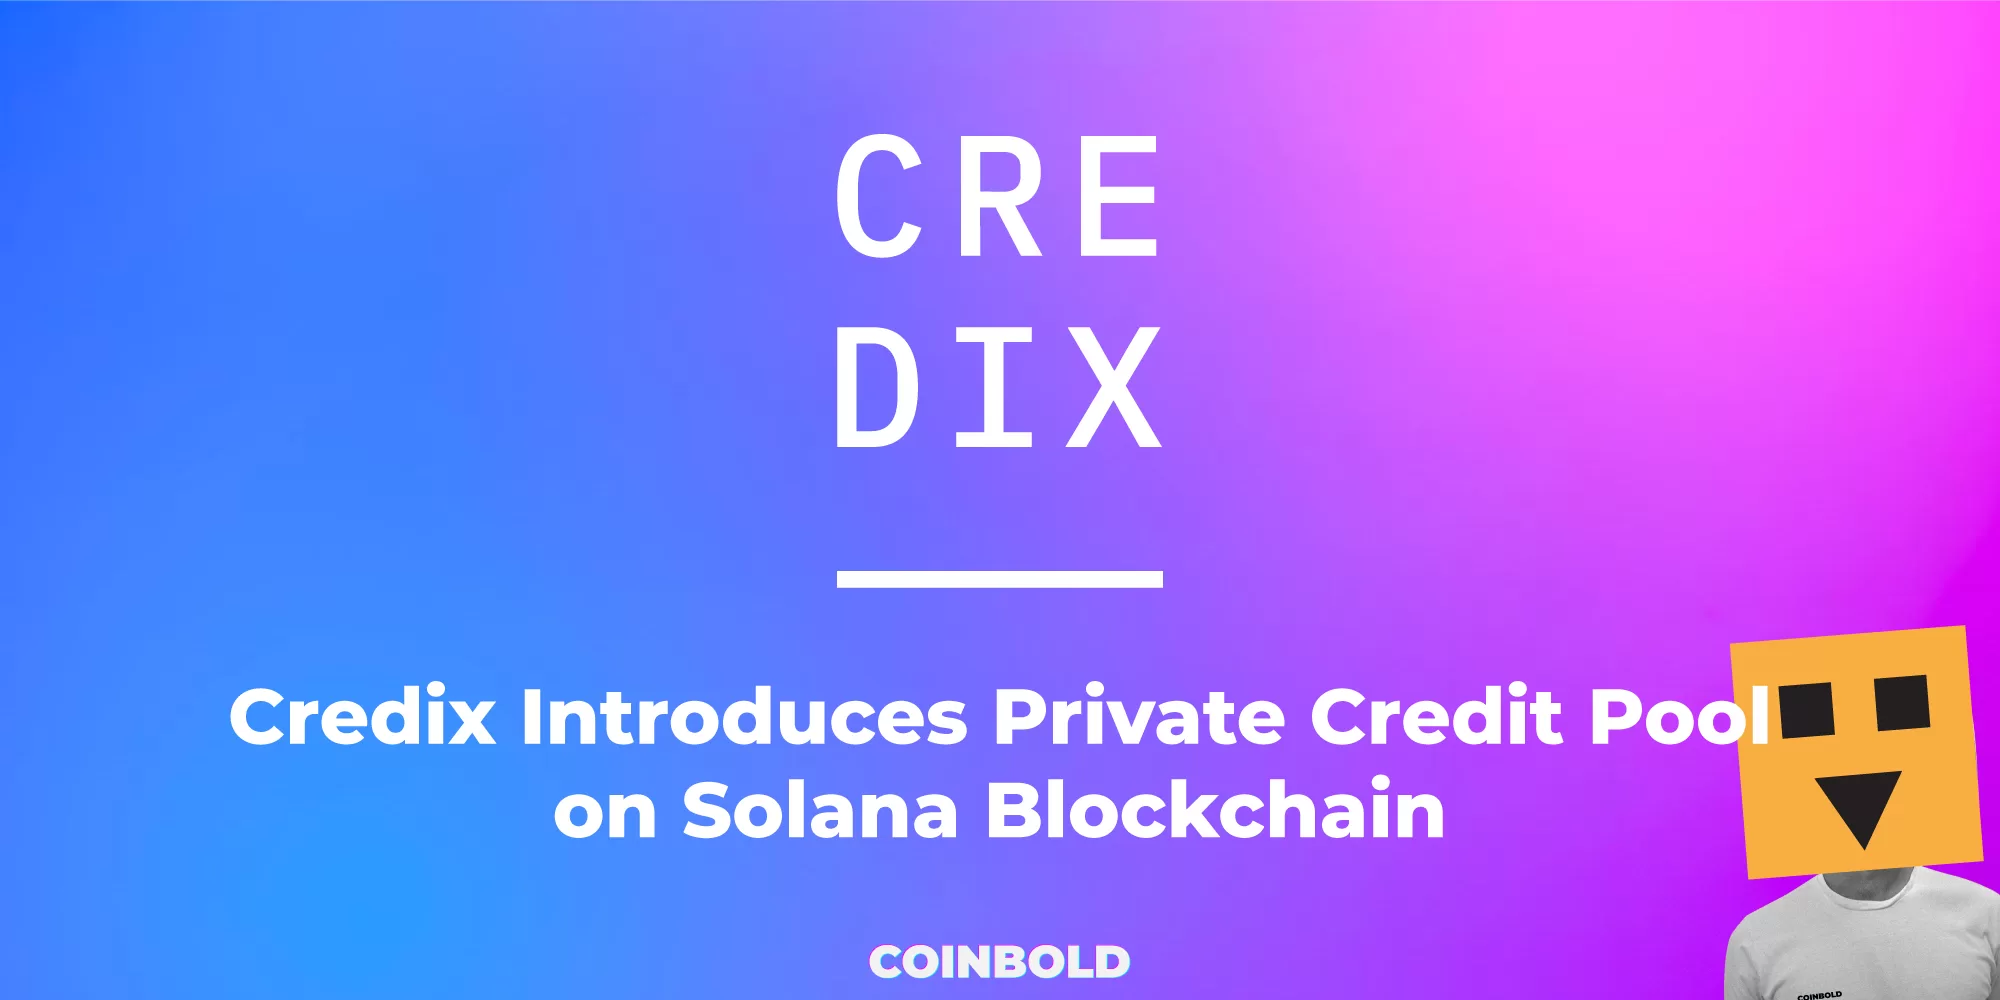 Credix Introduces Private Credit Pool on Solana Blockchain